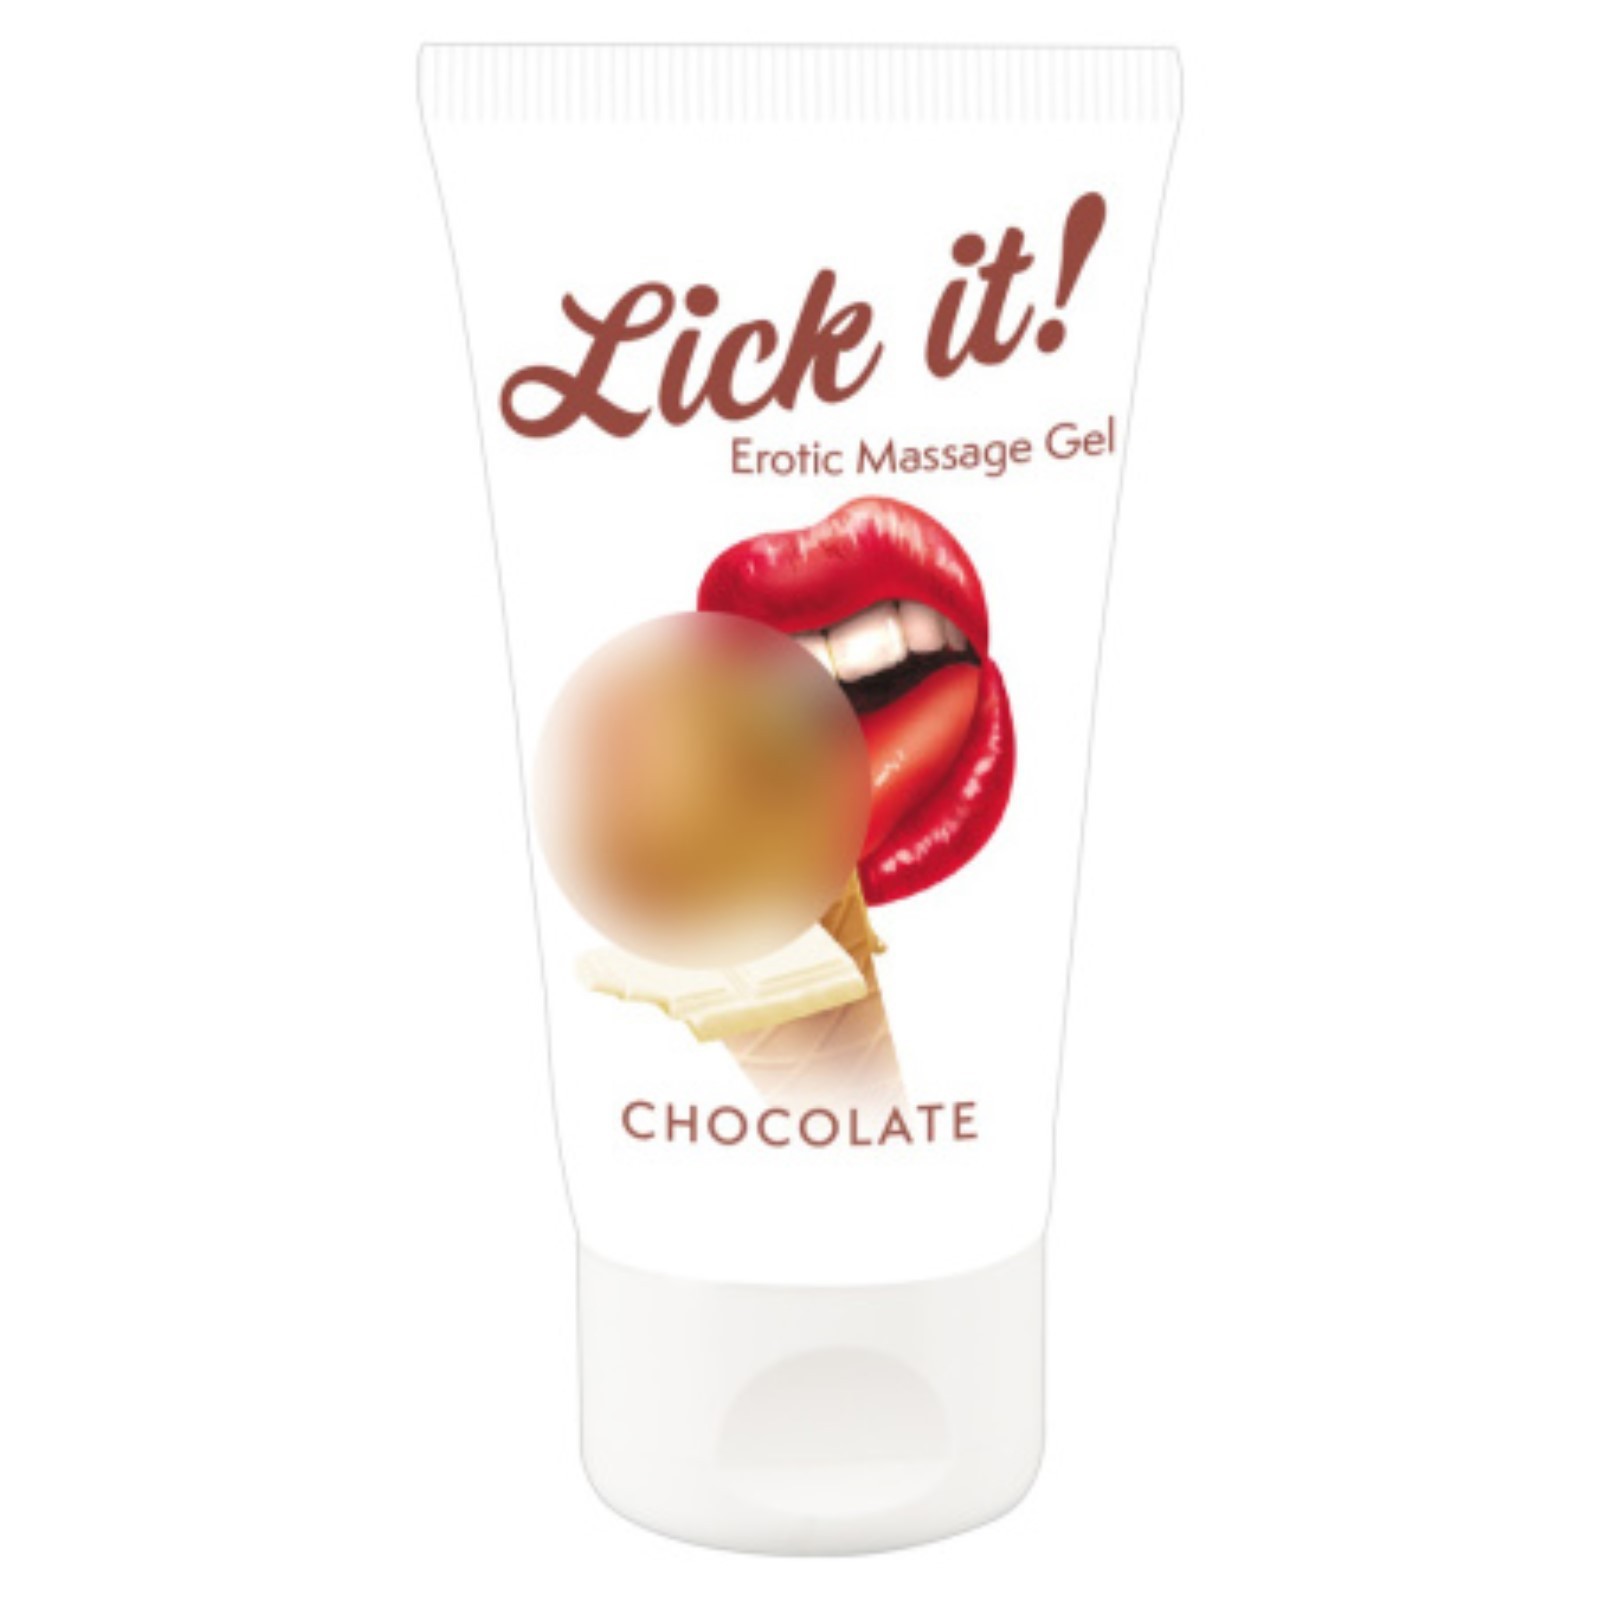  Lick it!   , , 50 